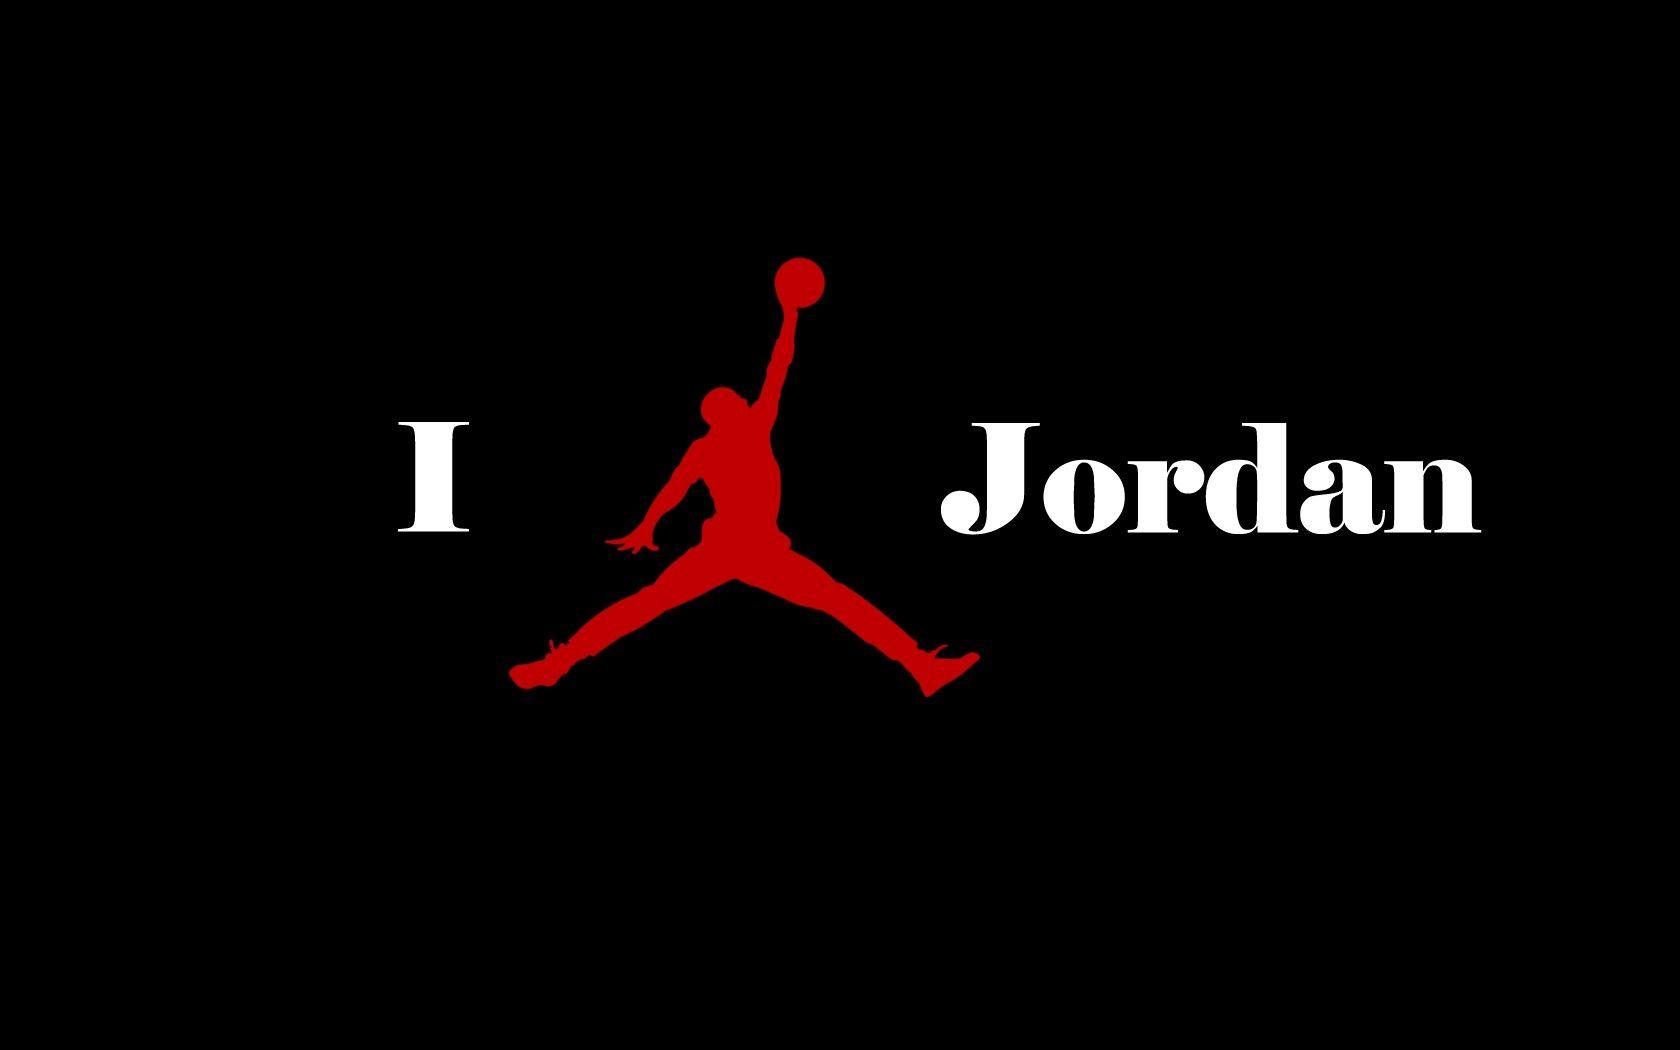 Michael Jordan Wallpaper and Background Imagex1050